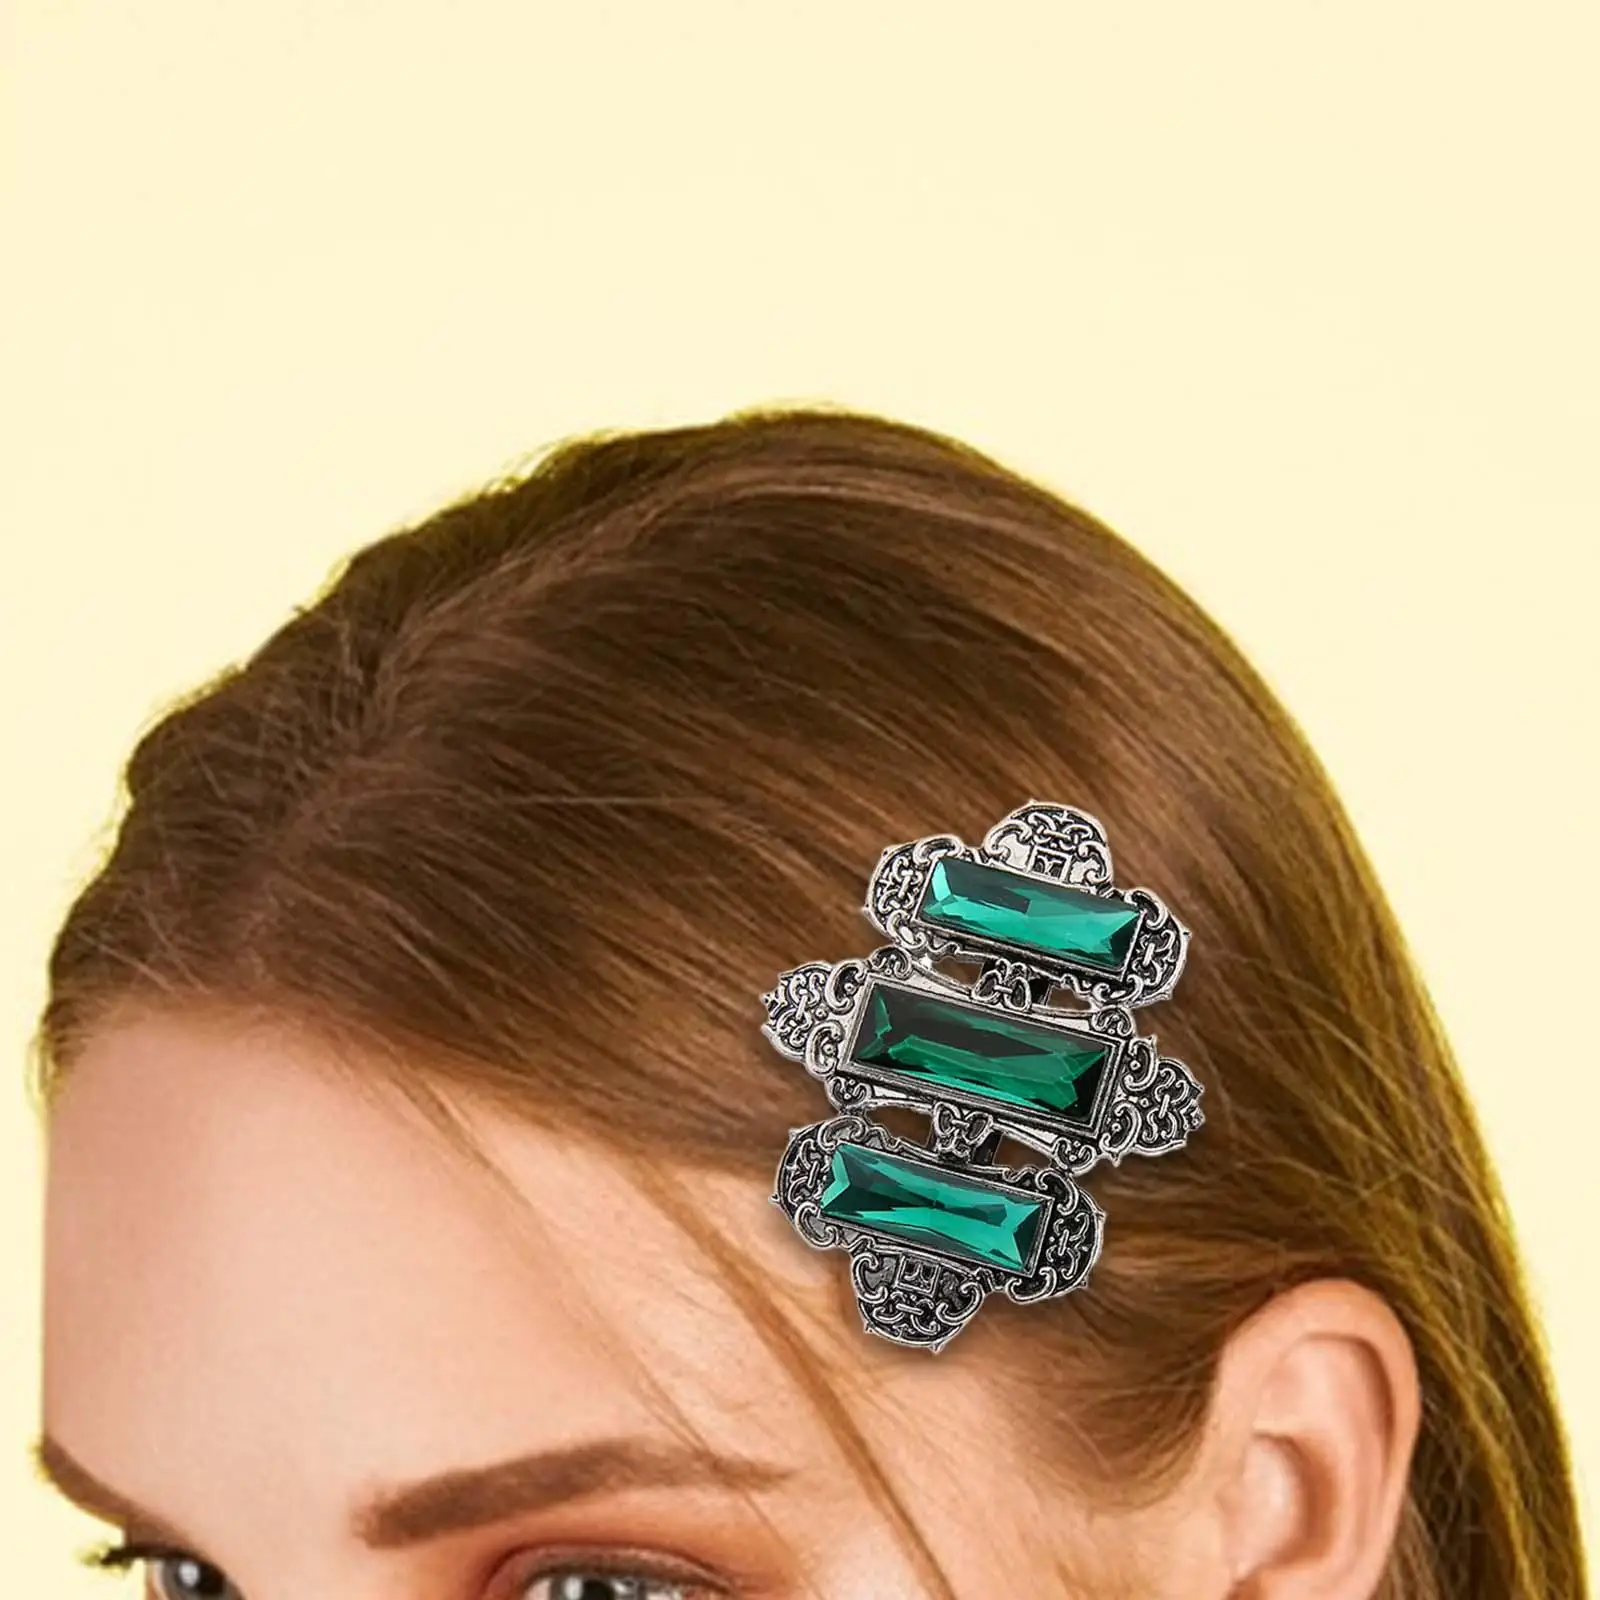 Duckbill Clip Hairpins Hair Accessory Fashion Headwear Metal Barrettes Gift Decorative for Prom Makeup Birthday Wedding Bridal